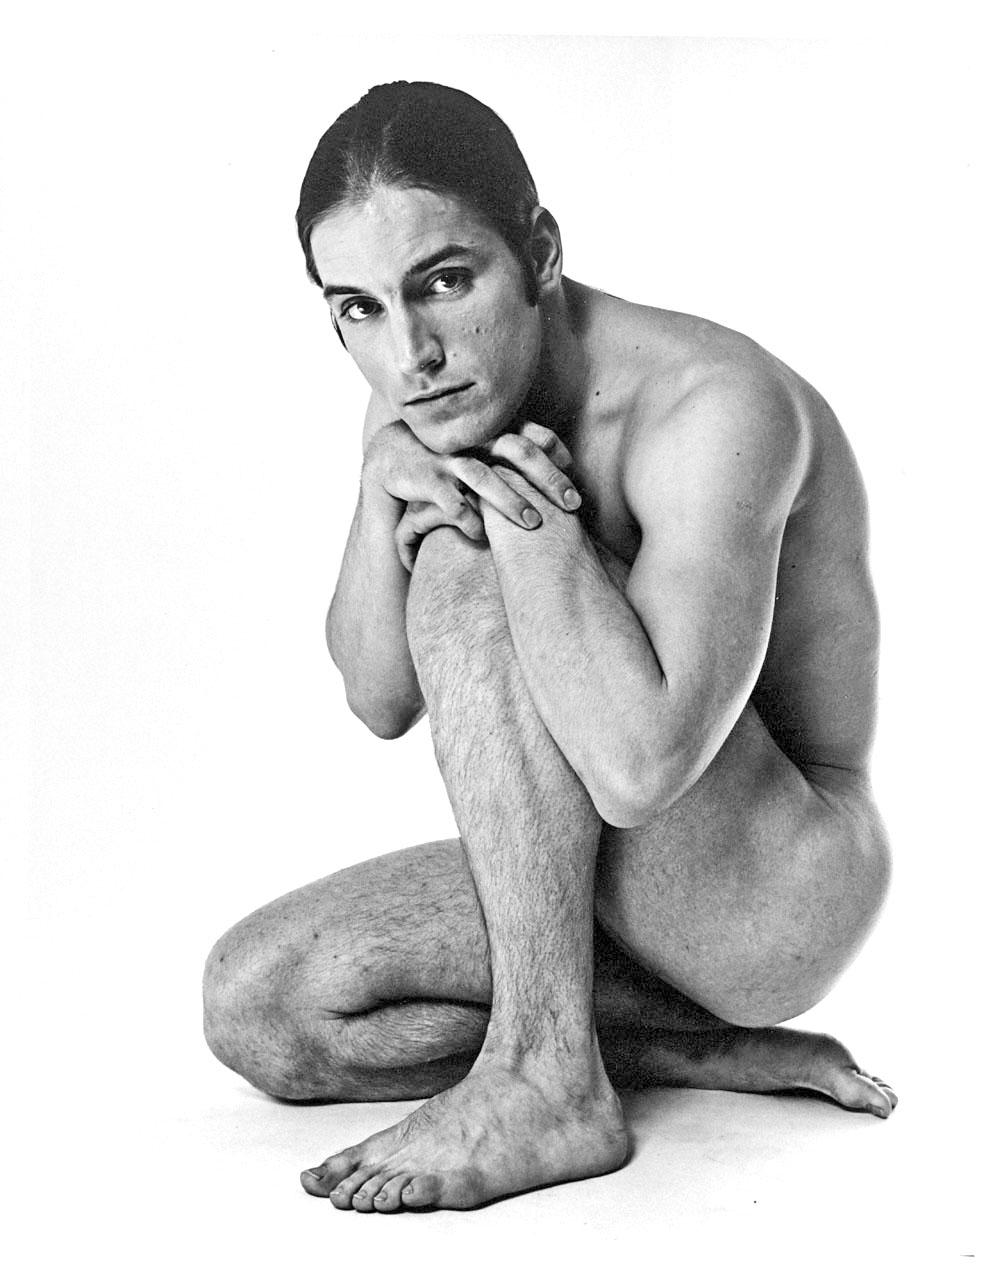 Warhol Superstar Joe Dallesandro star of "Trash" nude, signed by Jack Mitchell